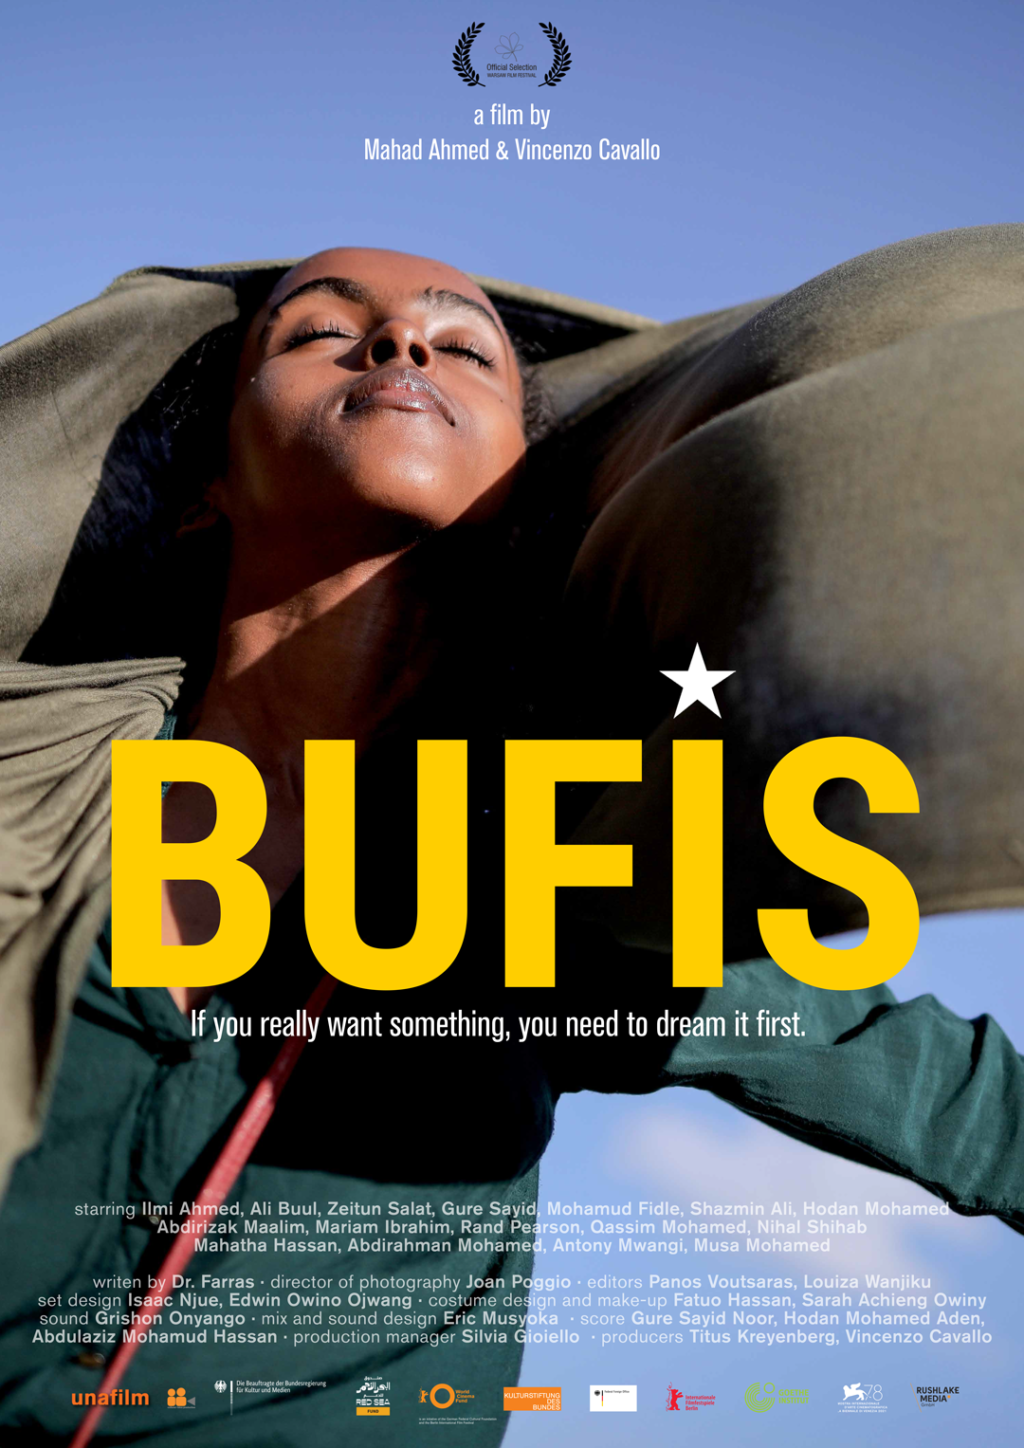 Kenyan-Somali-Feature-Film-"BUFIS"-Sparks-Controversy-Ahead-of-Warsaw-International-Film-Festival-Premiere